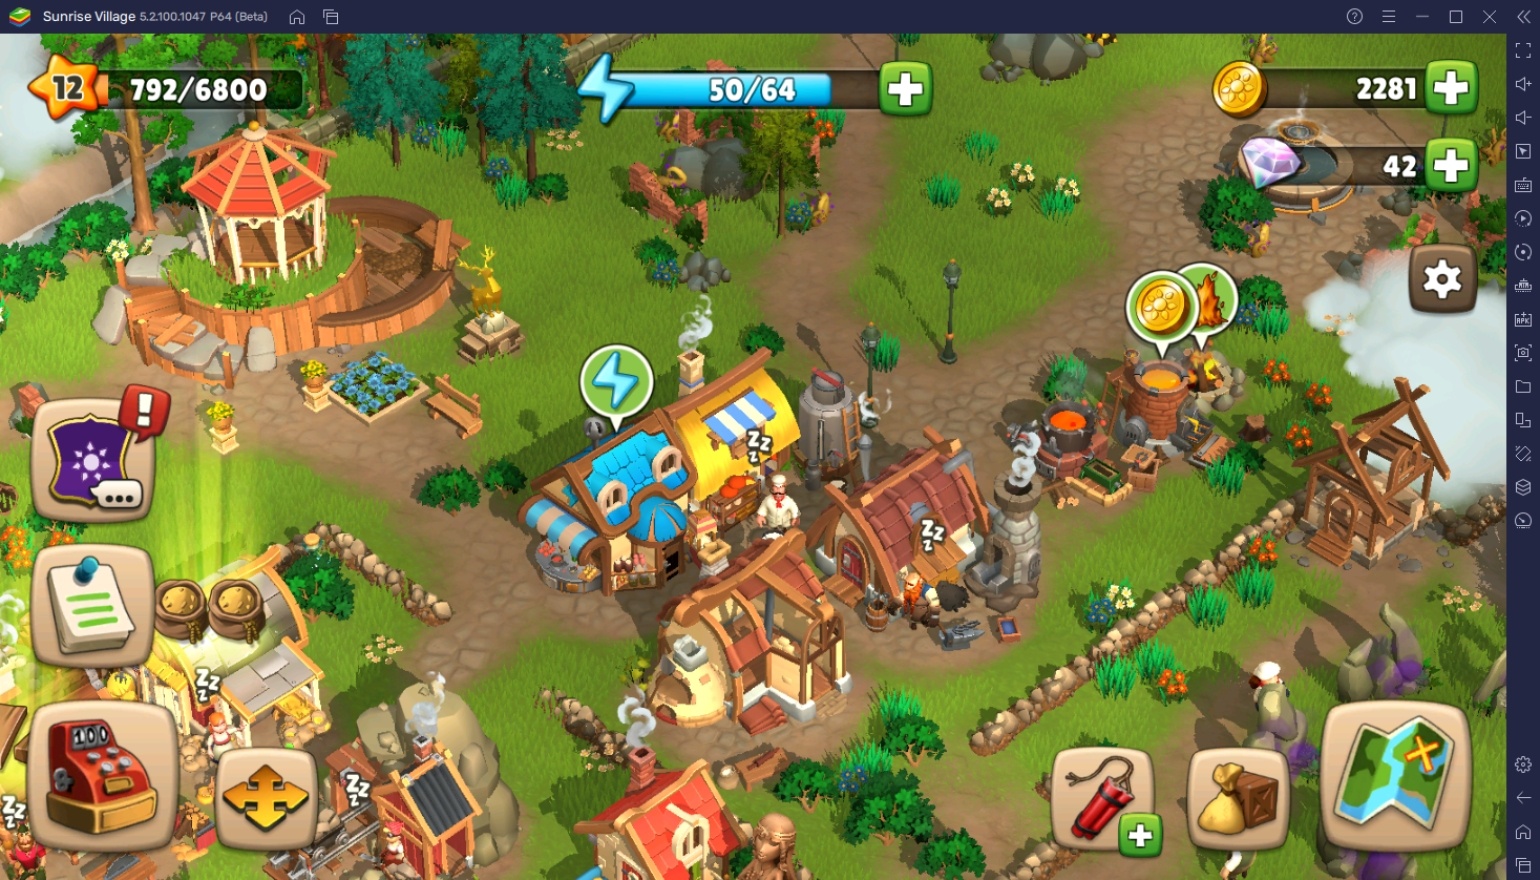 Tips & Tricks When Playing Sunrise Village